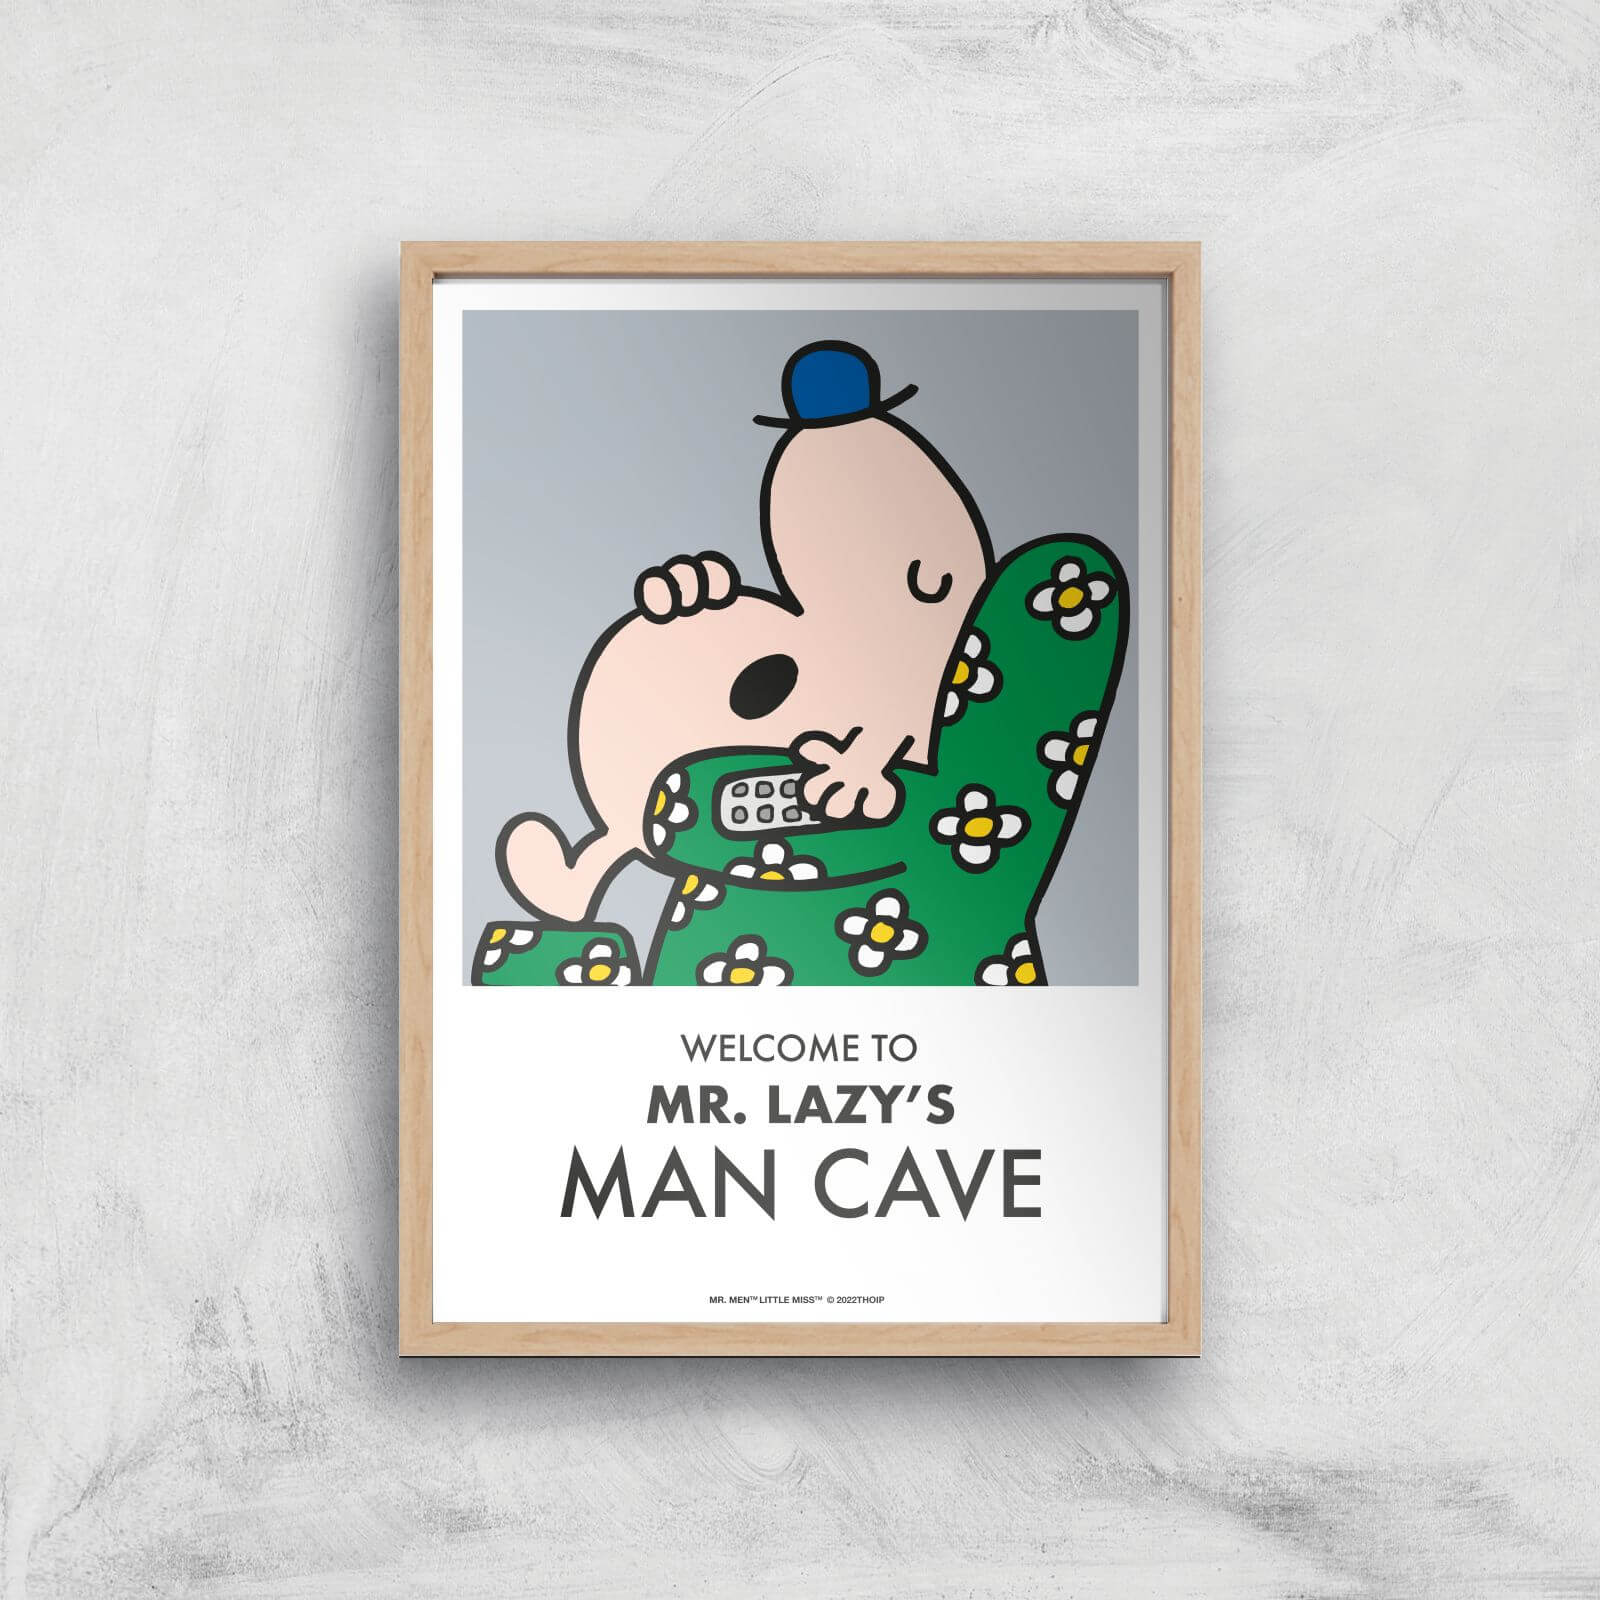 Mr Men & Little Miss Mr. Lazy's Man Cave Giclee Art Print - A3 - Wooden Frame